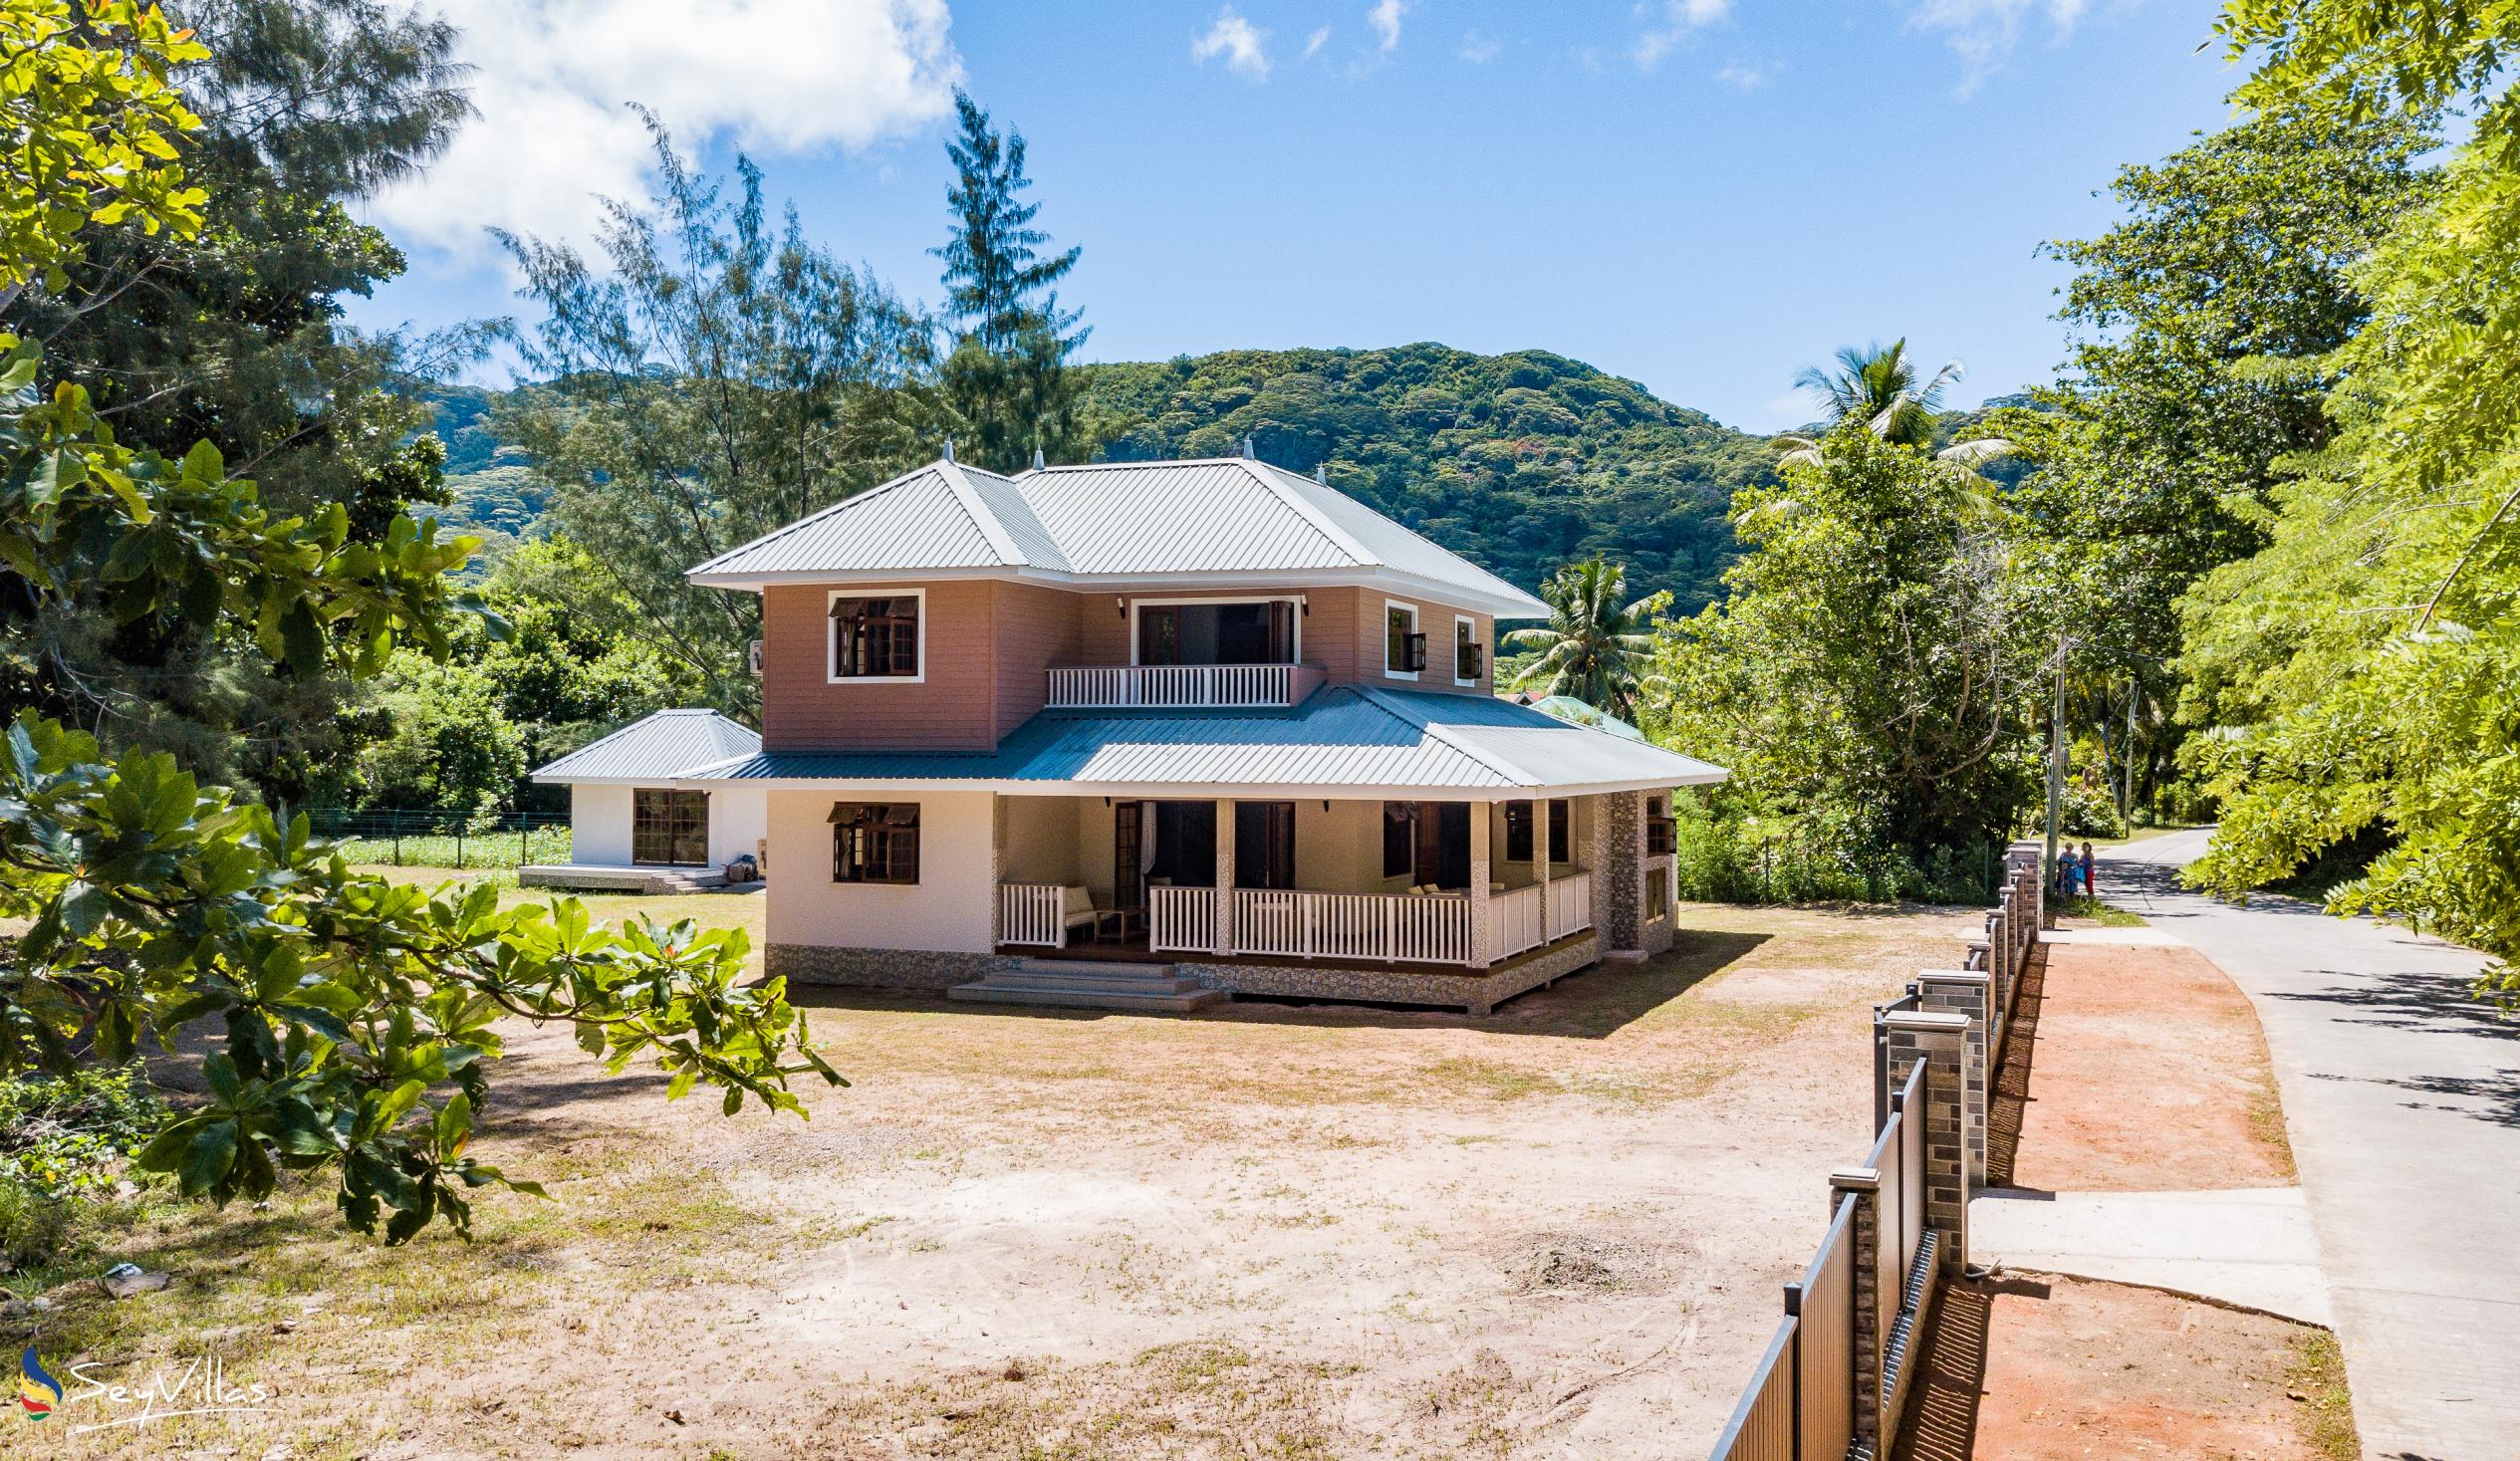 Photo 2: L'Etang Residence - Outdoor area - La Digue (Seychelles)